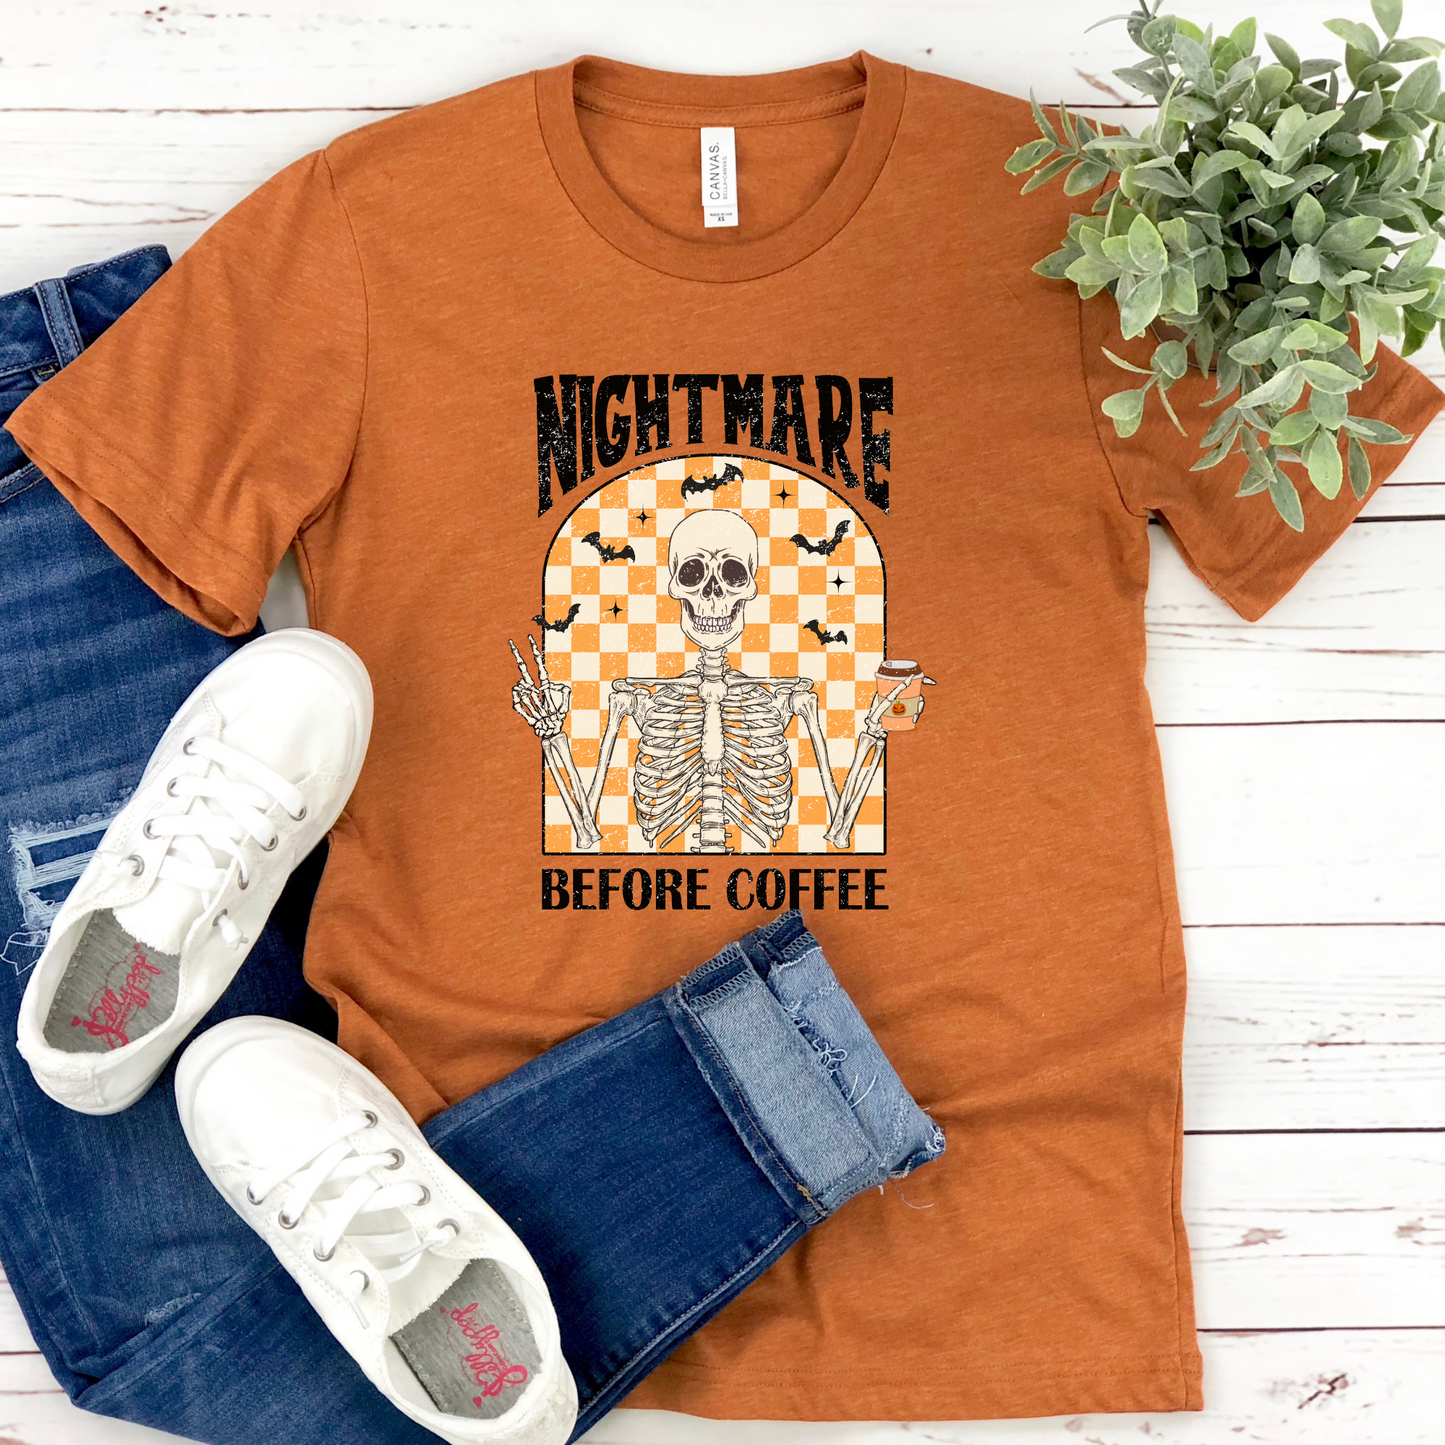 Nightmare Before Coffee T-Shirt